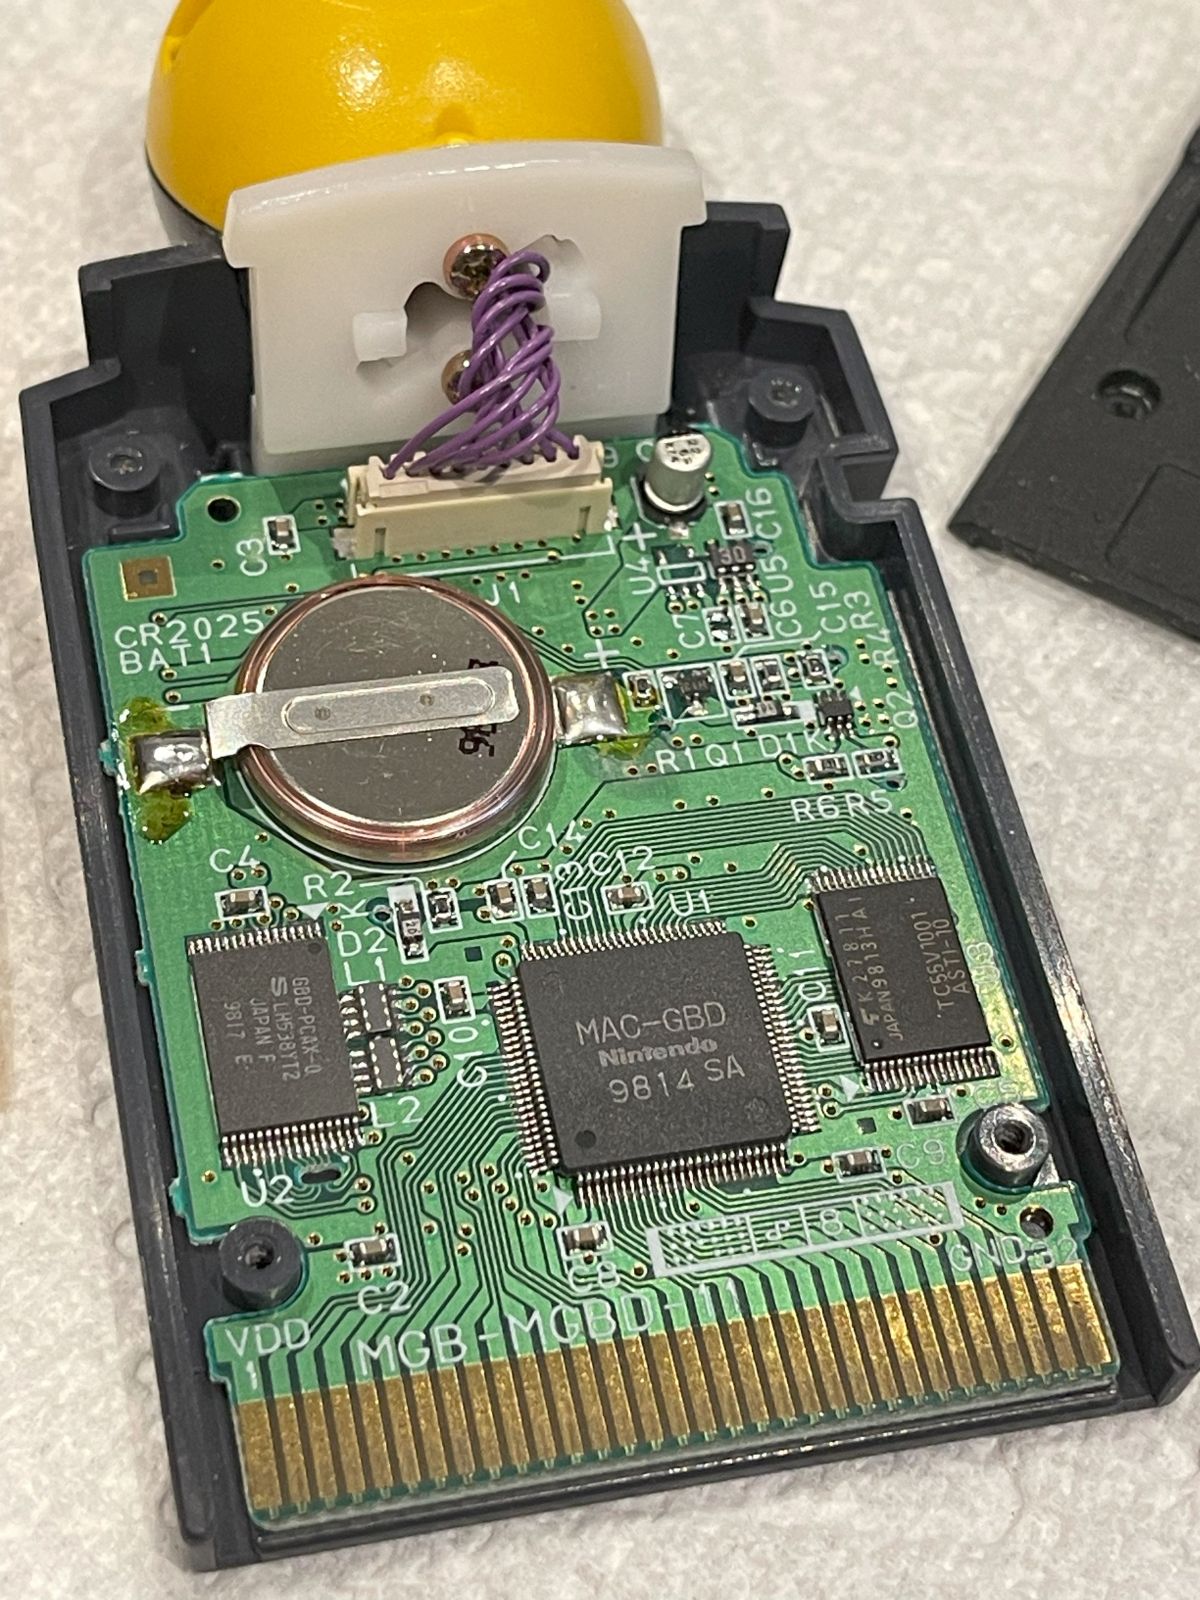 Inside the Game Boy Camera cartridge